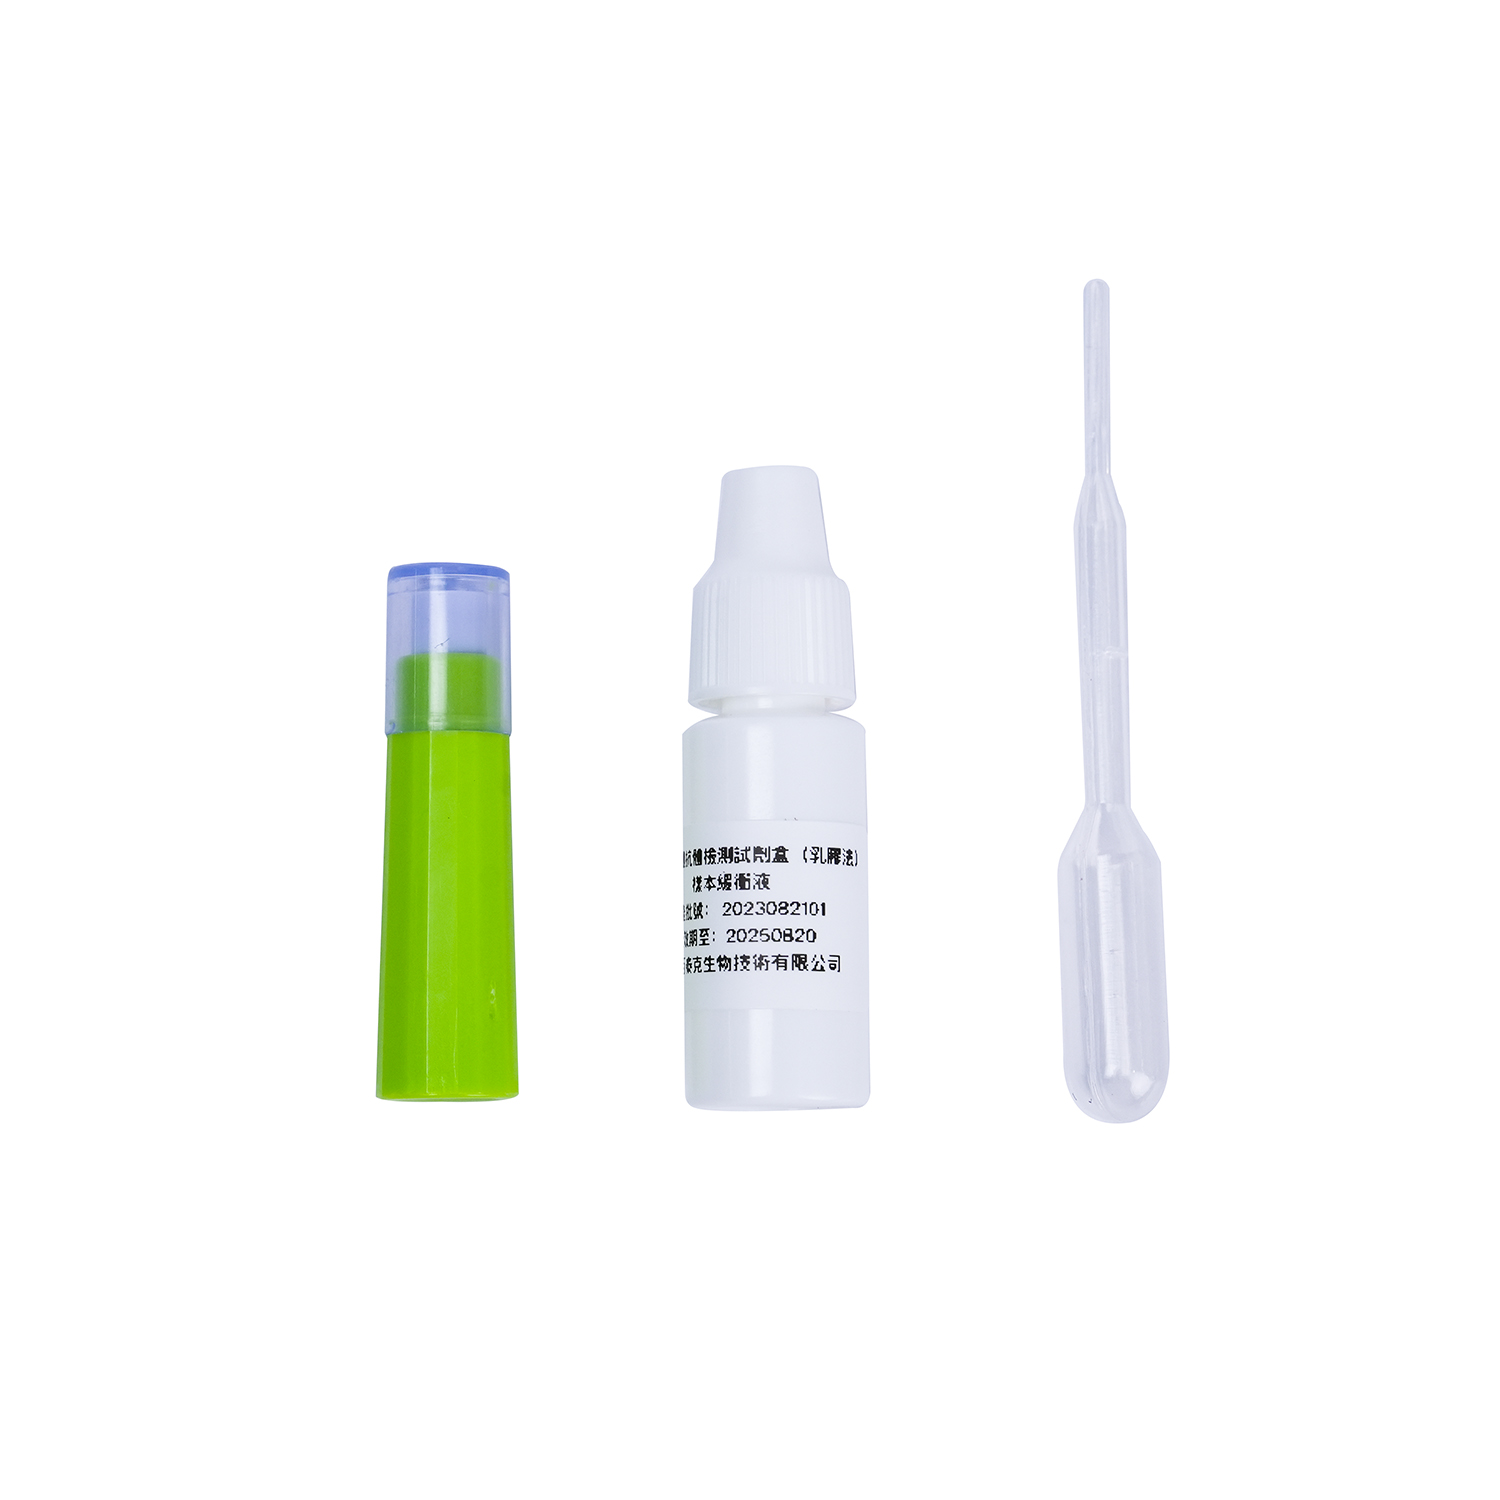 Treponema Pallidum Antibody Rapid Test Kit(Immunochromatographic Assay)